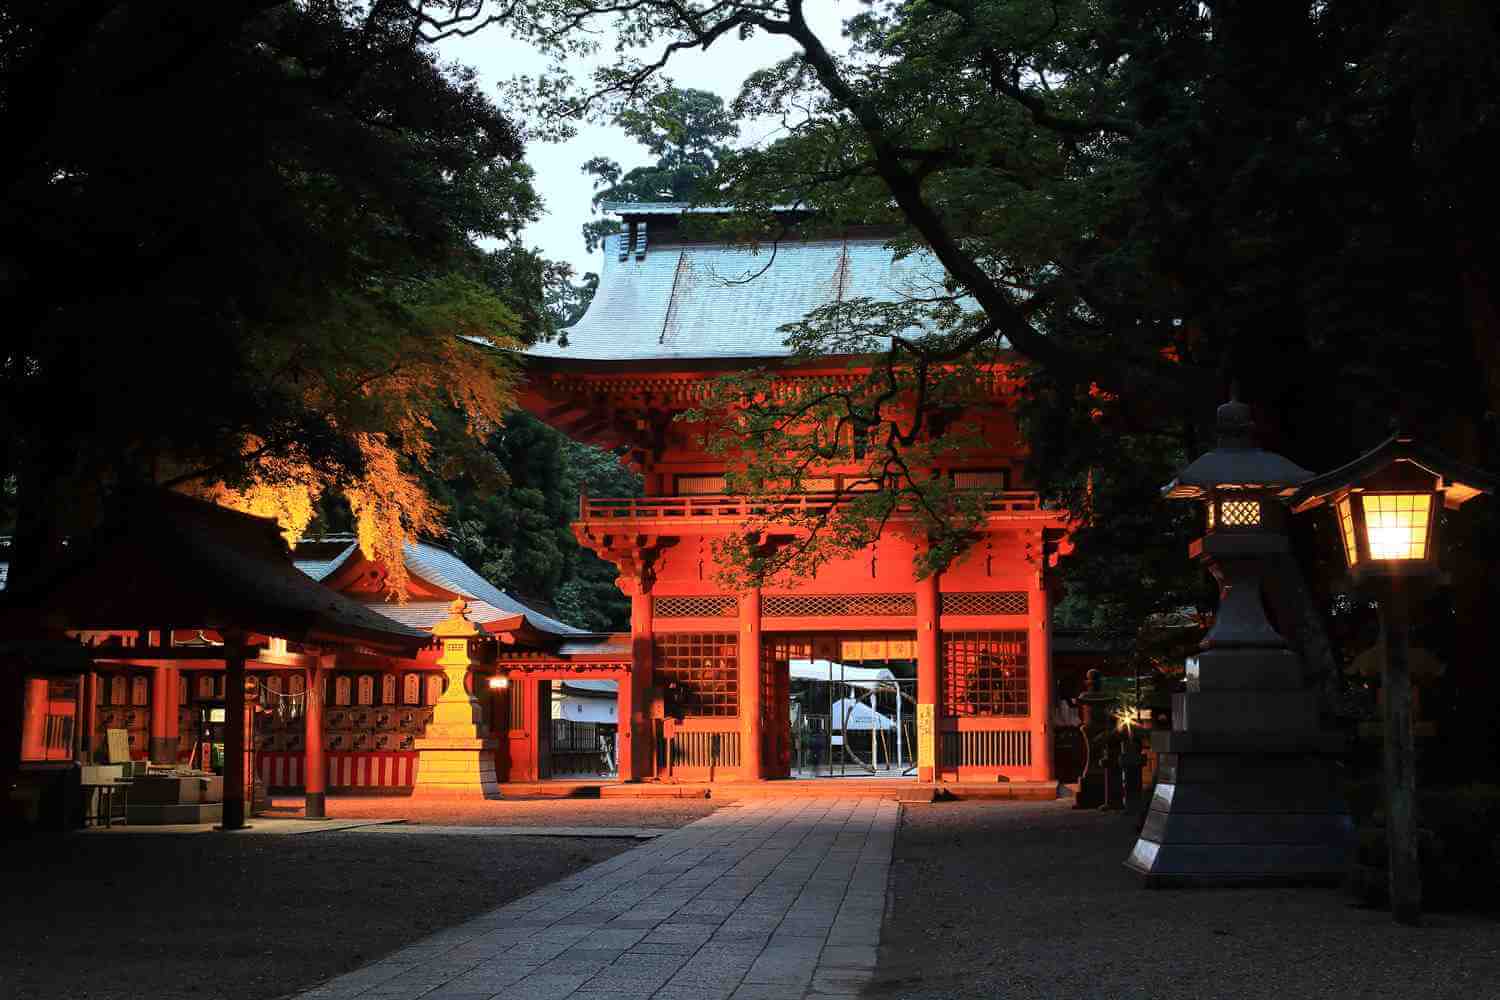 Photos: Kashima-jingu Shrine in Ibaraki Prefecture